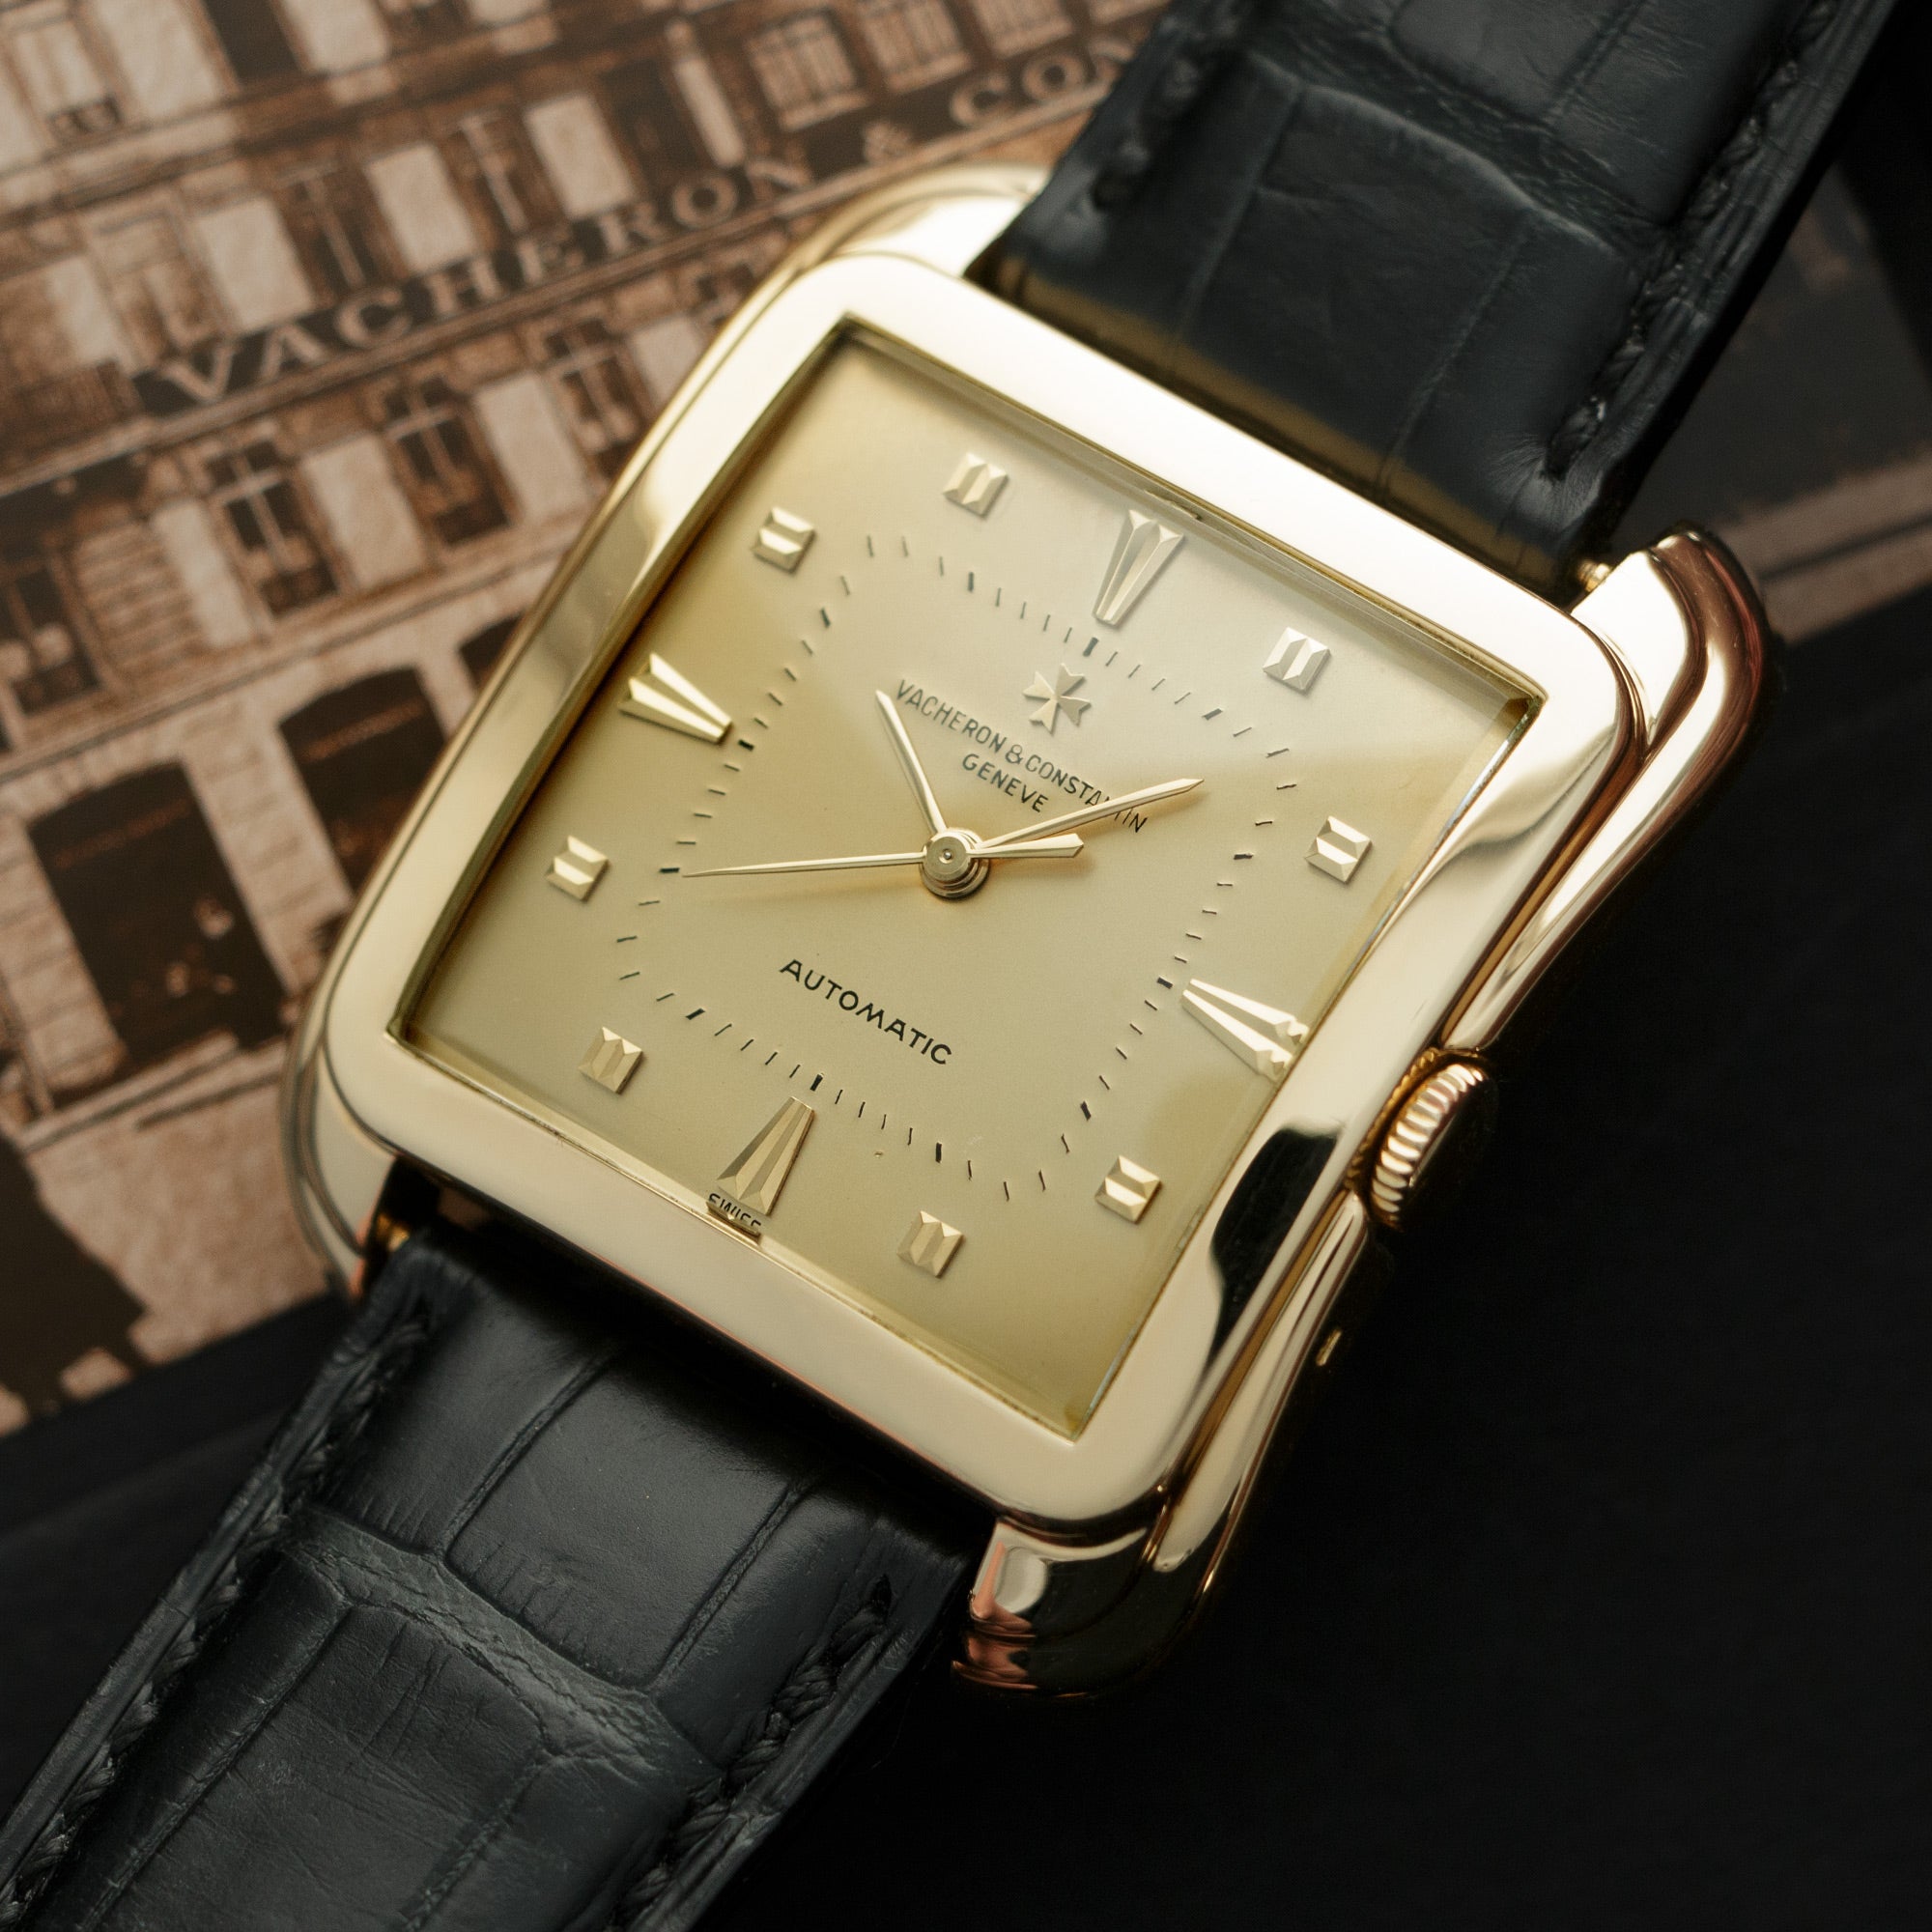 Vacheron Constantin - Vacheron Constantin Cioccolatone Yellow Gold Watch Ref. 4737 with Archive Paper - The Keystone Watches